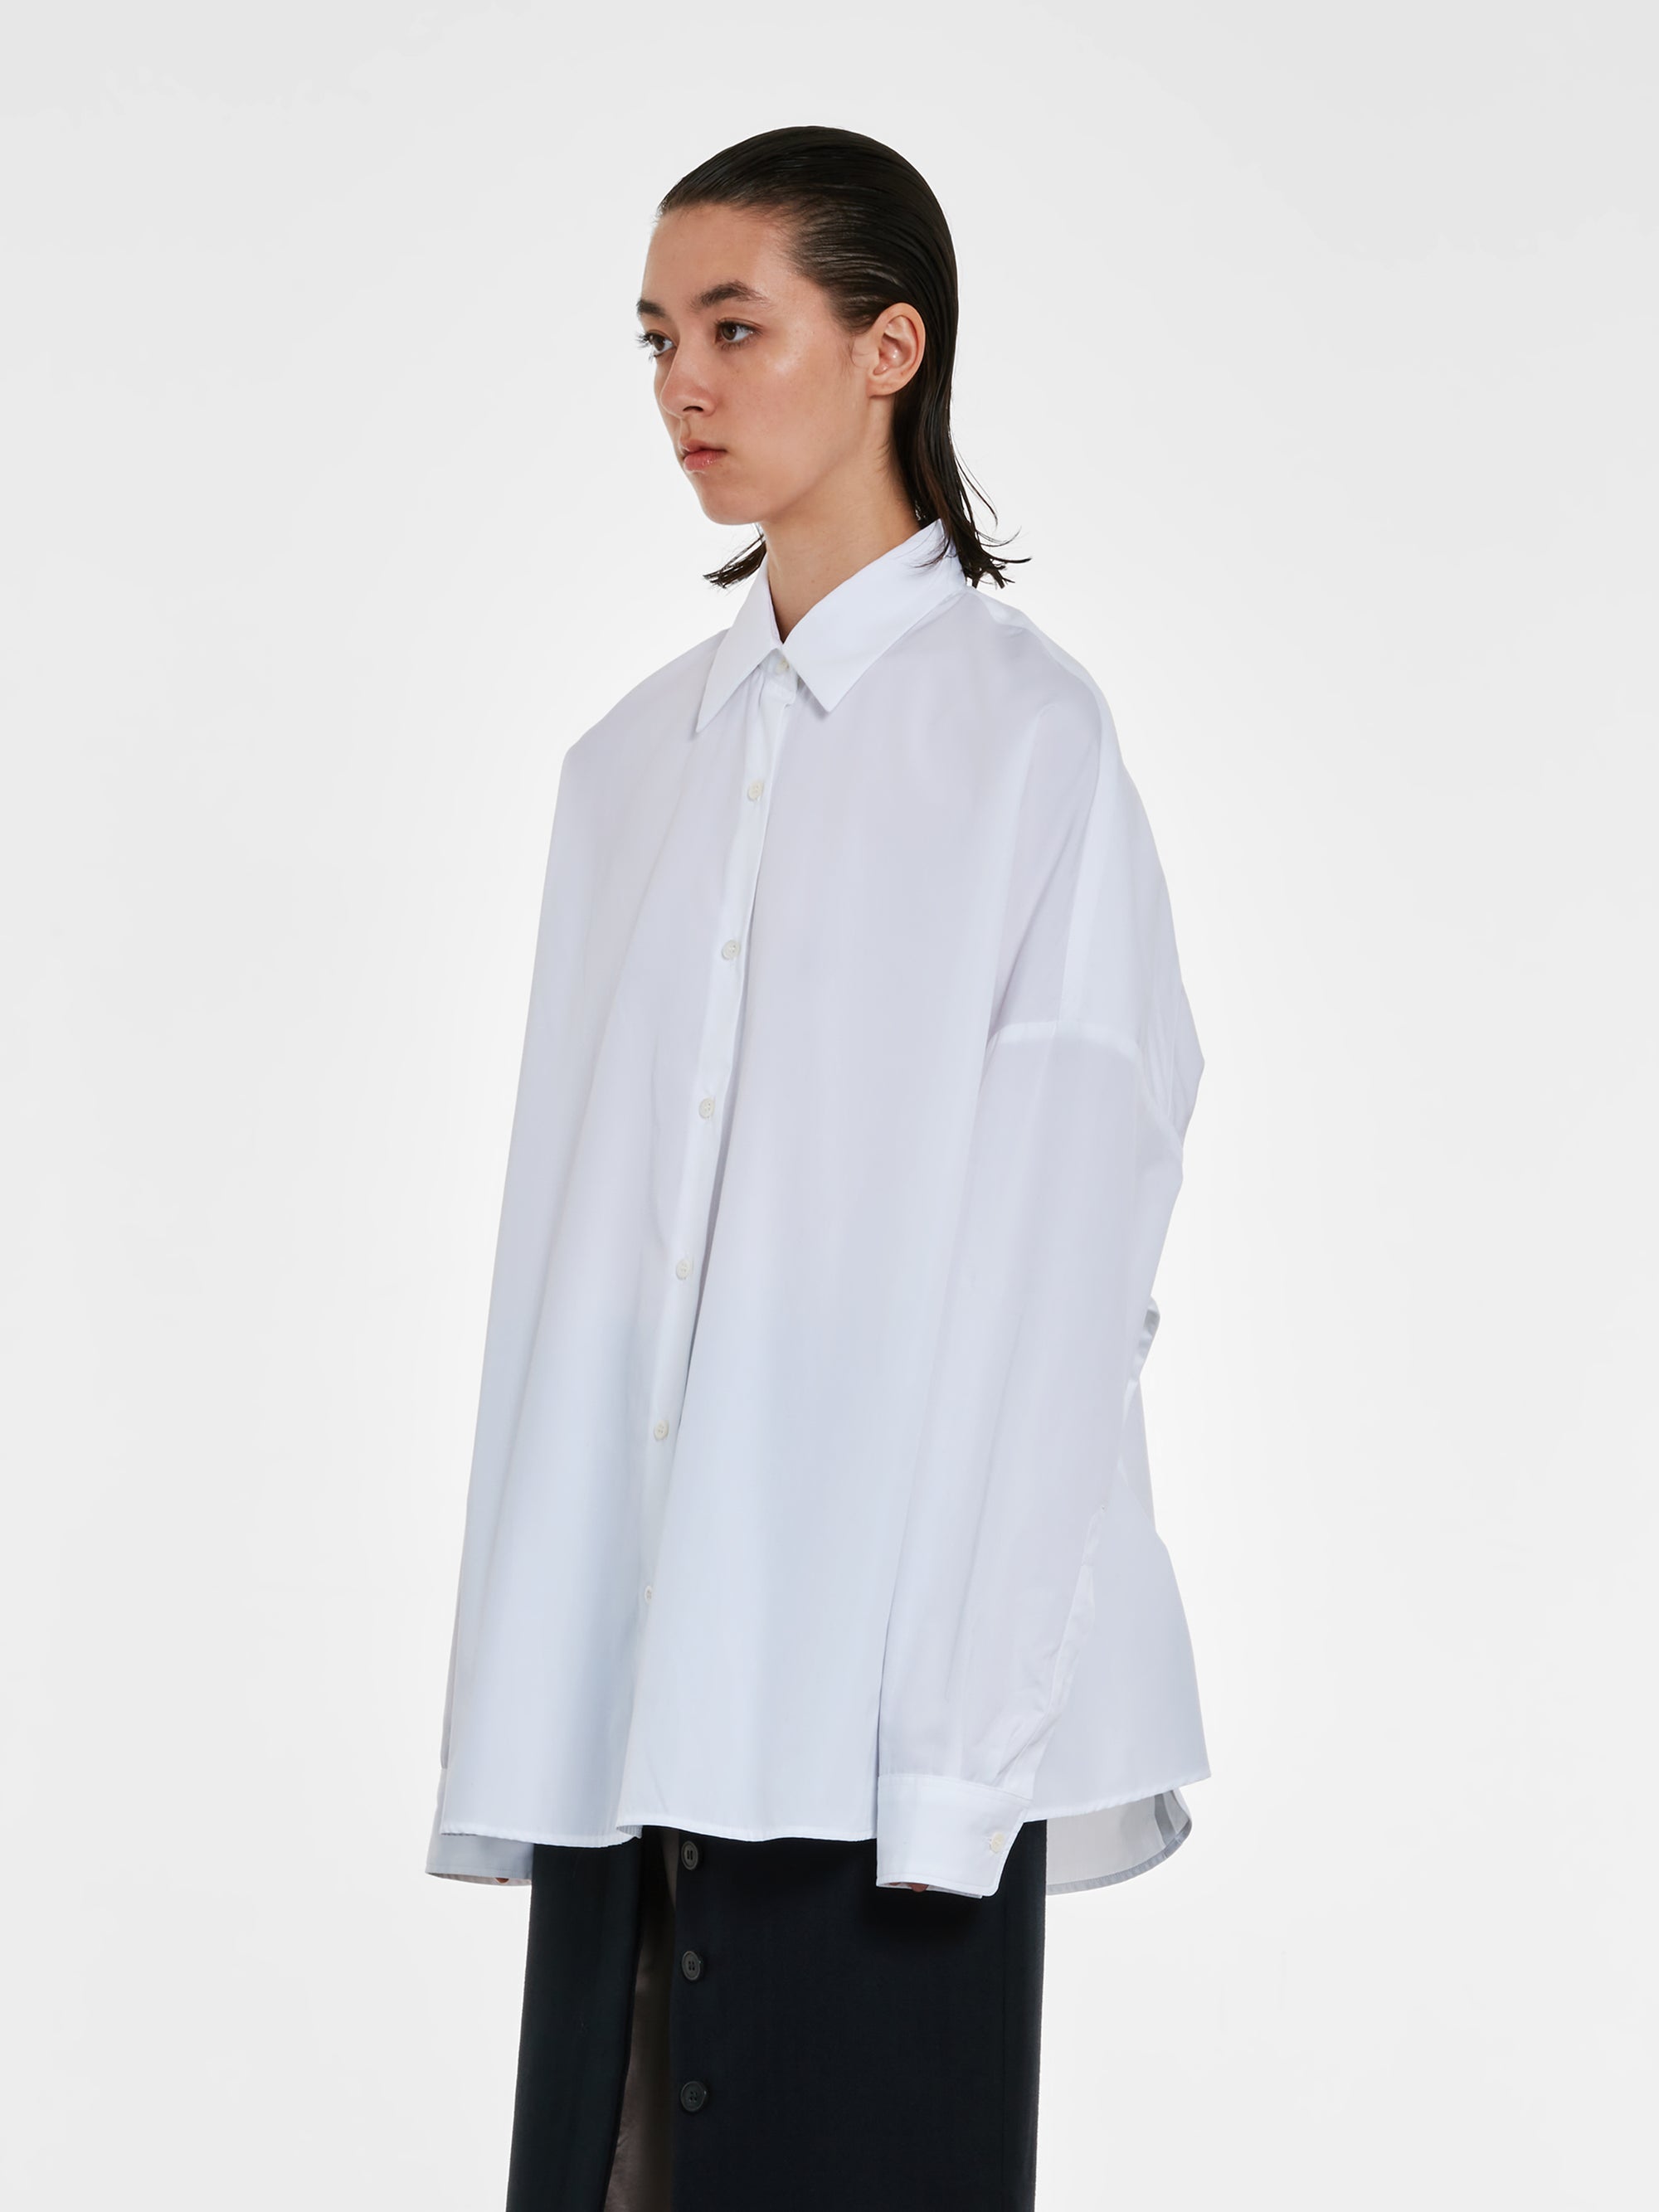 Dries Van Noten - Women’s Cotton Cocoon Shirt - (White) view 3